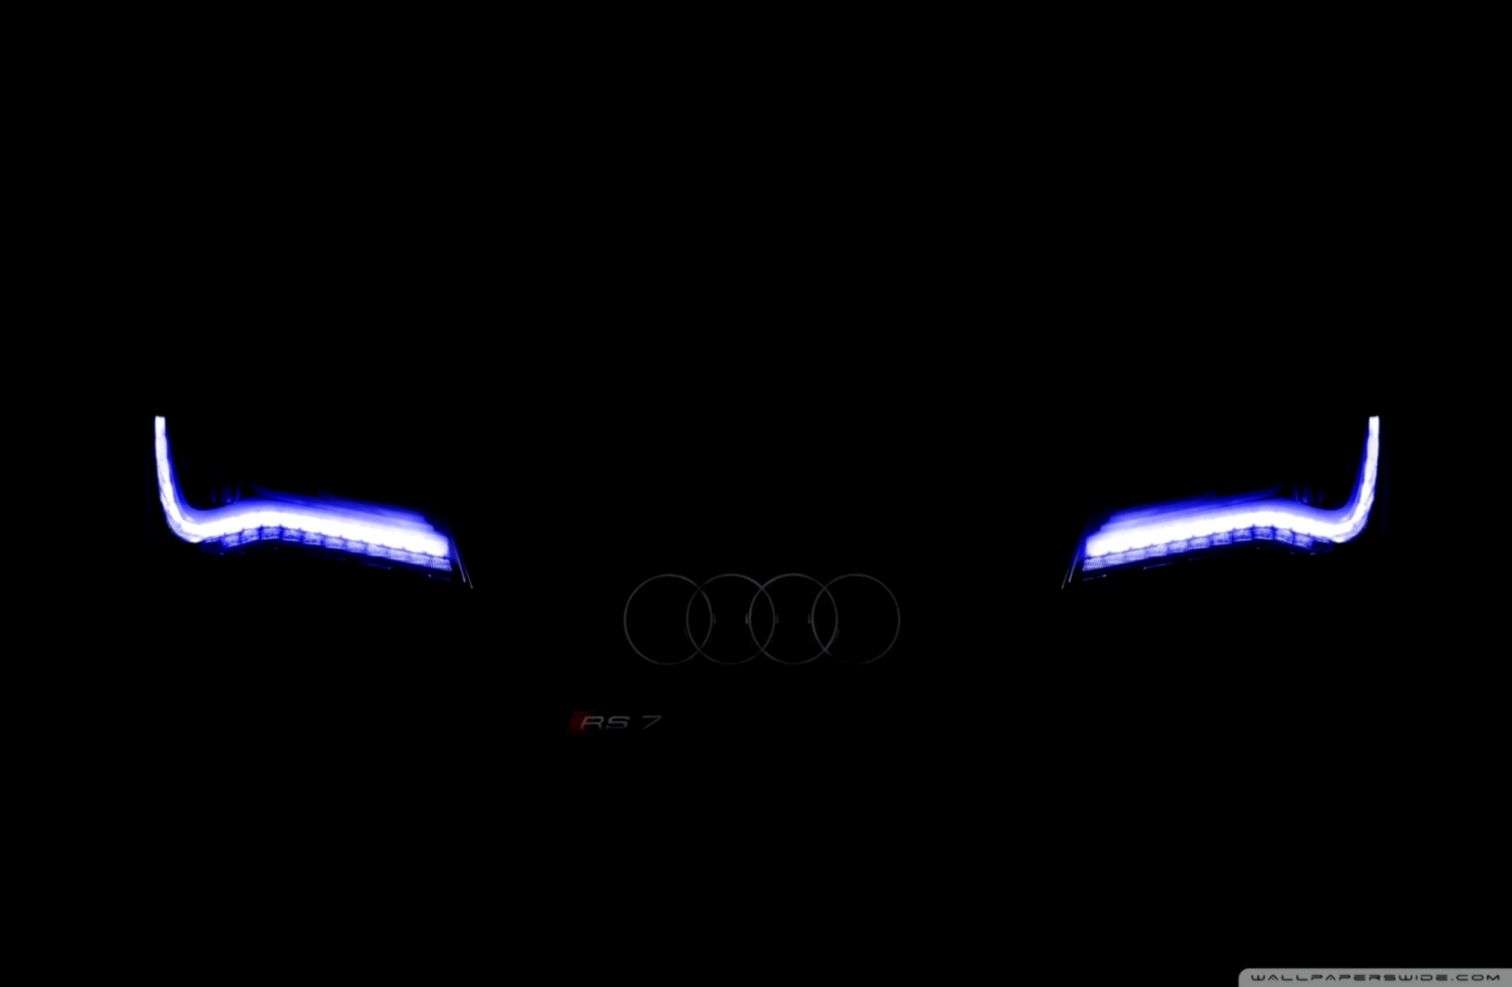 Audi Logo Wallpaper 4k iPhone